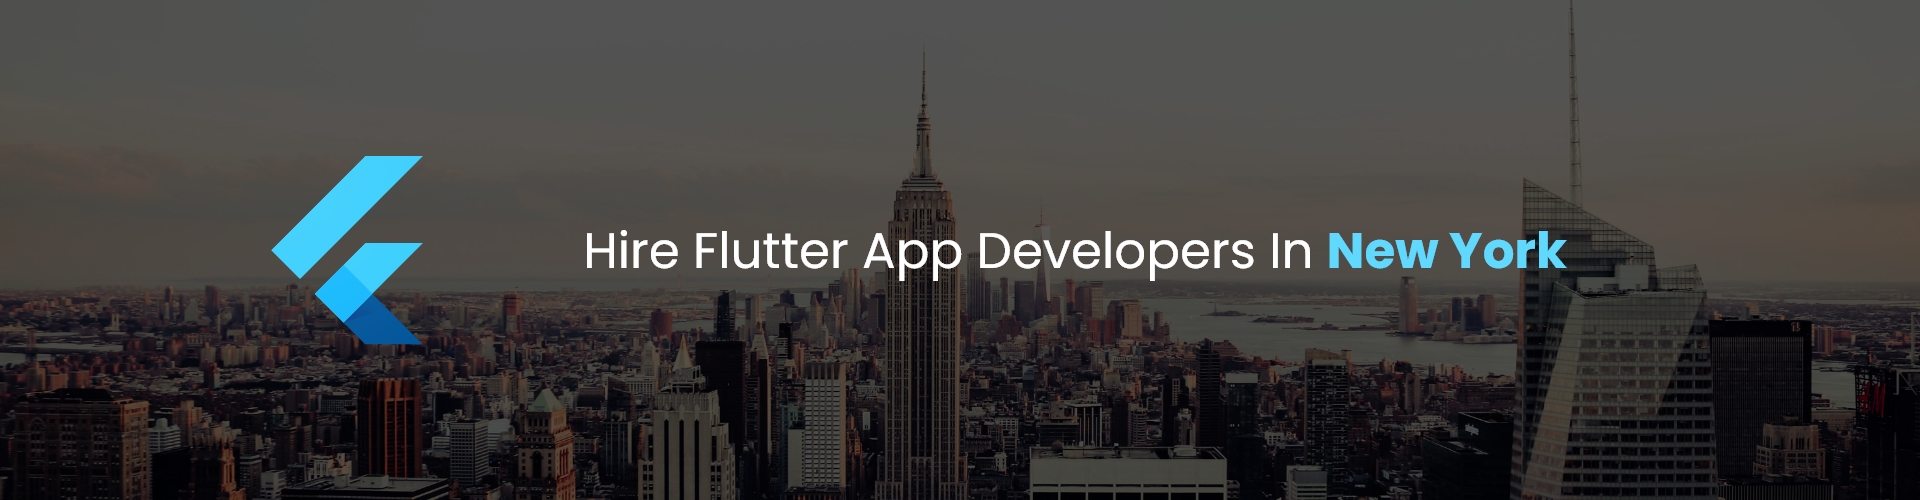 hire flutter app developers in new york